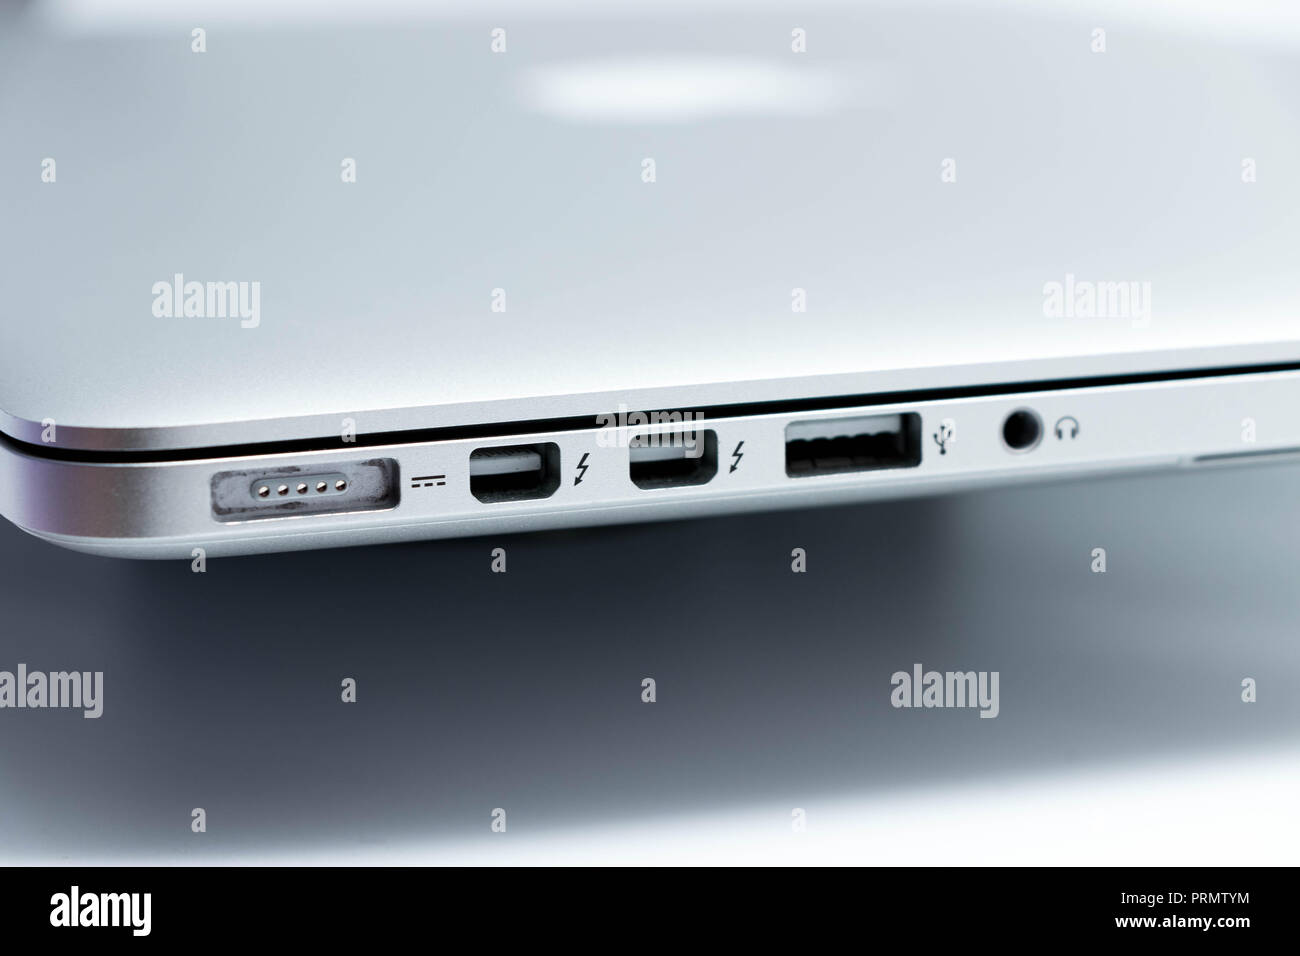 Computer Laptop Apple MacBook Pro USB HDMI-Anschluss Stockfotografie - Alamy